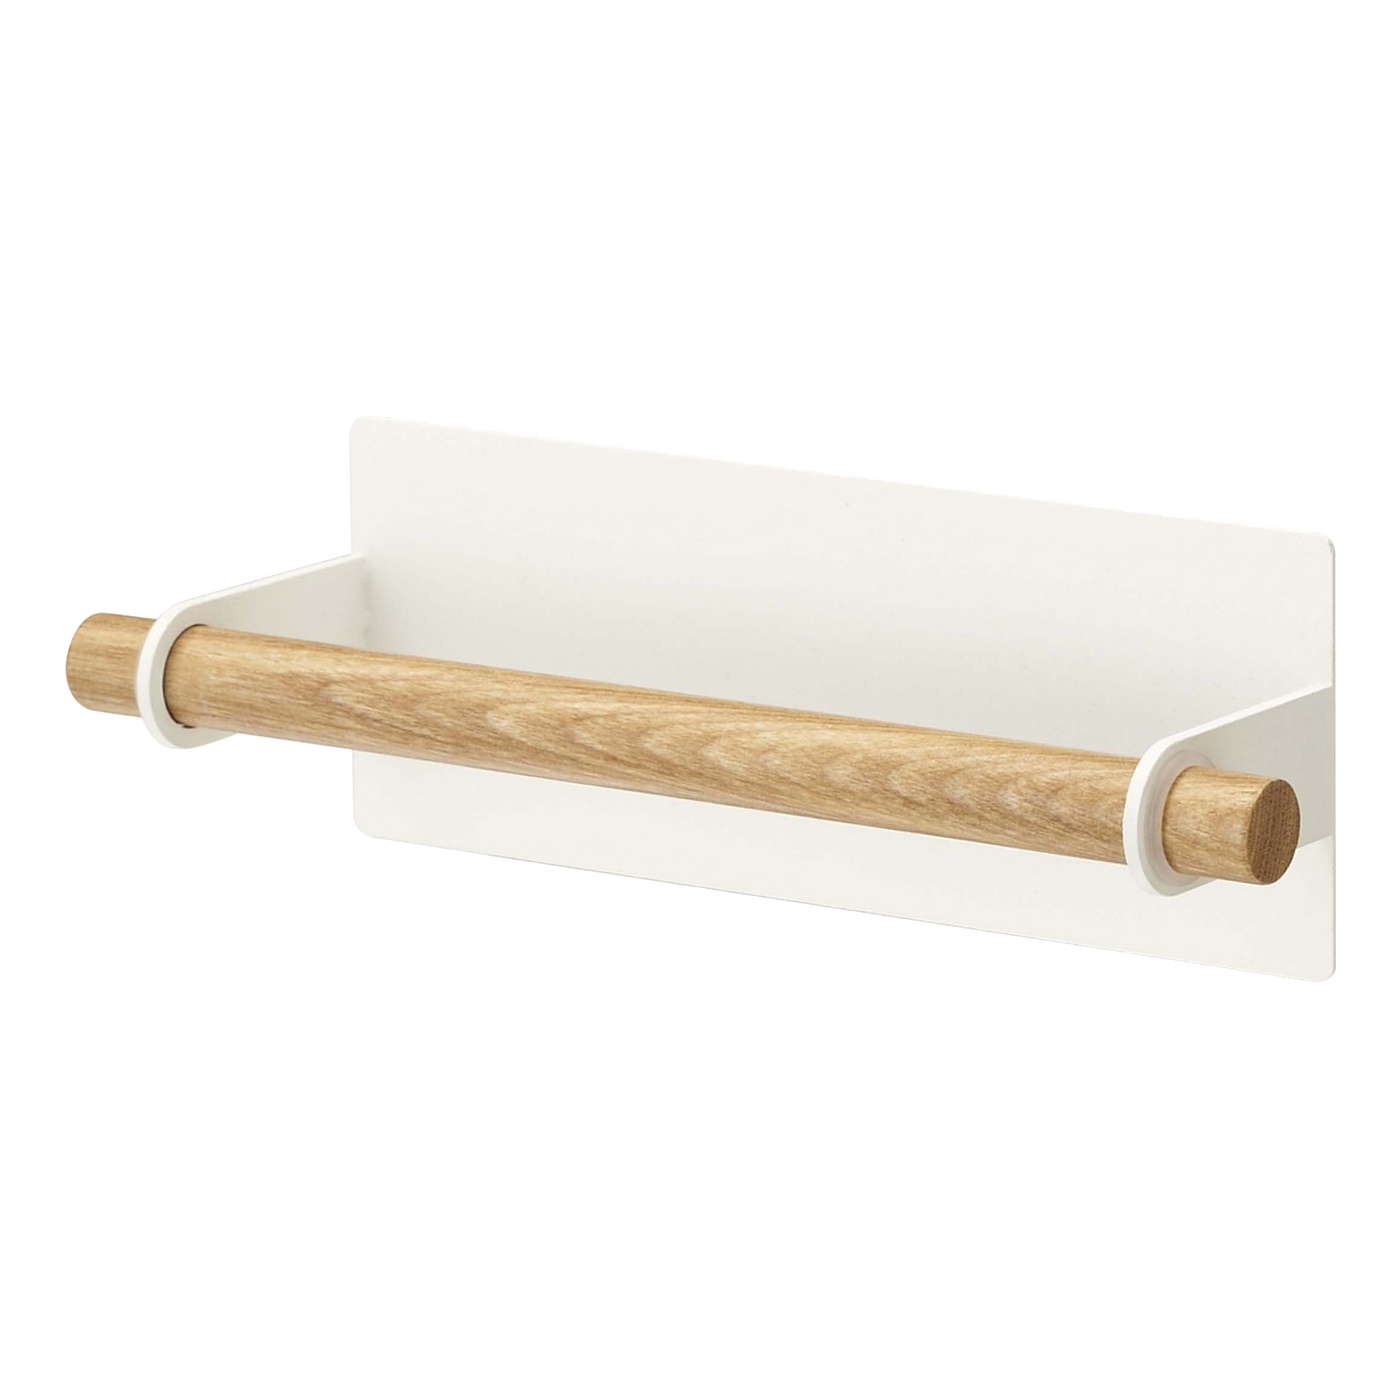 Product image of Yamazaki magnet towel rack with wooden rod